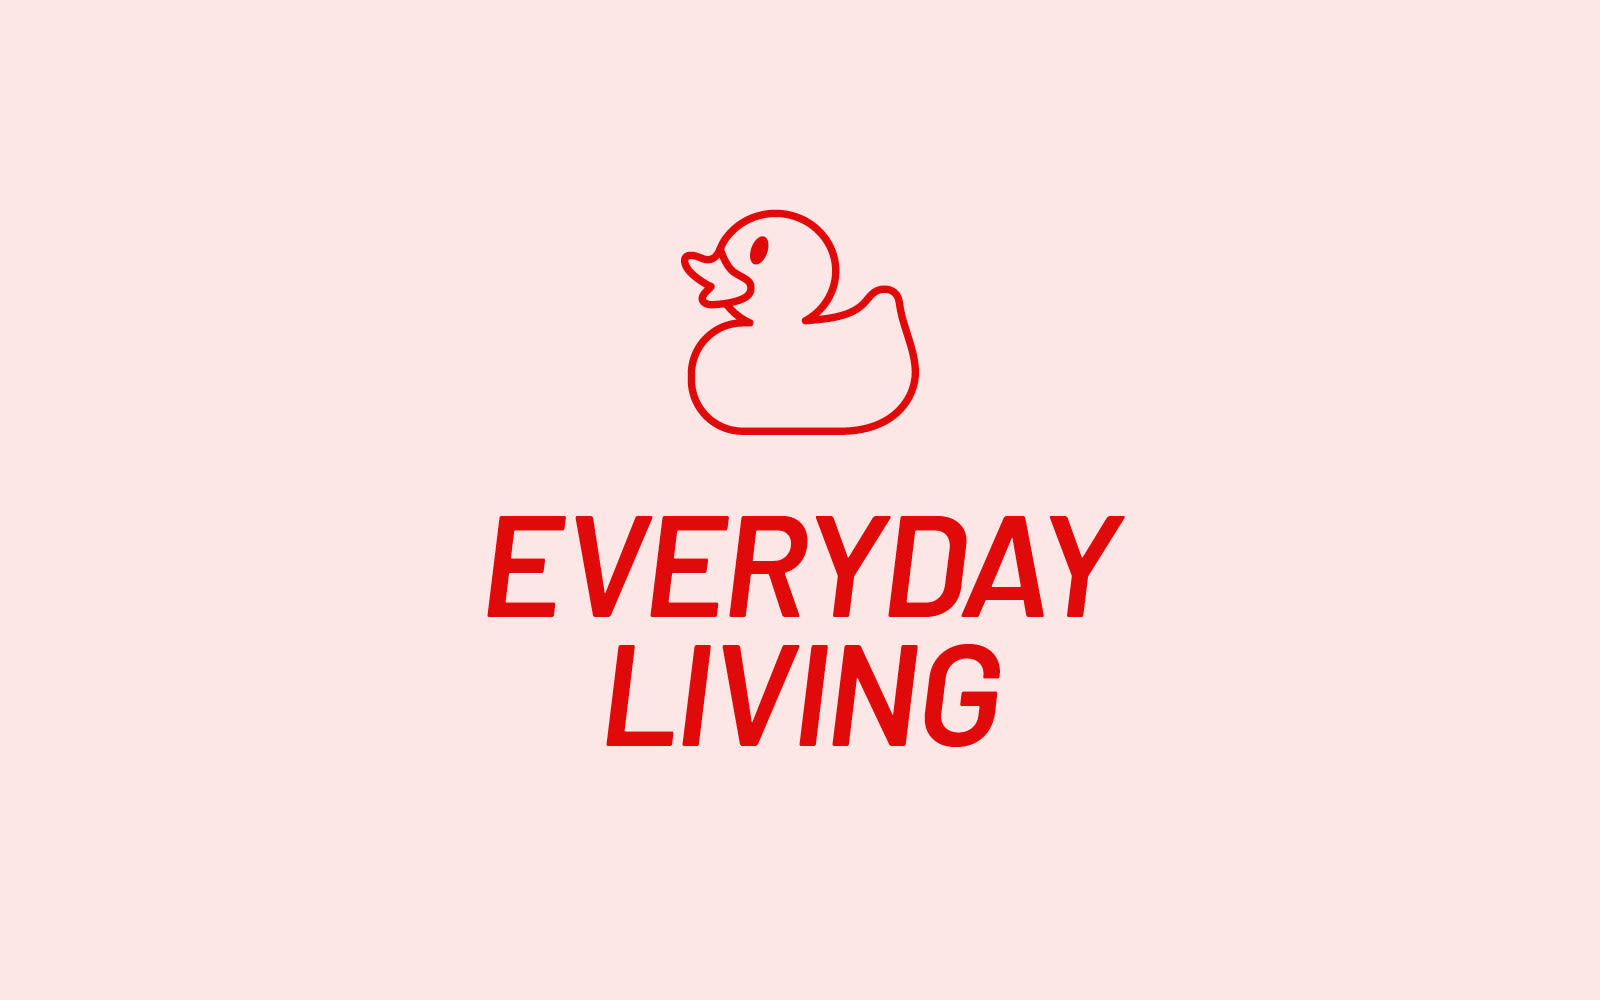 Virgin Red Reward Category Everyday Living